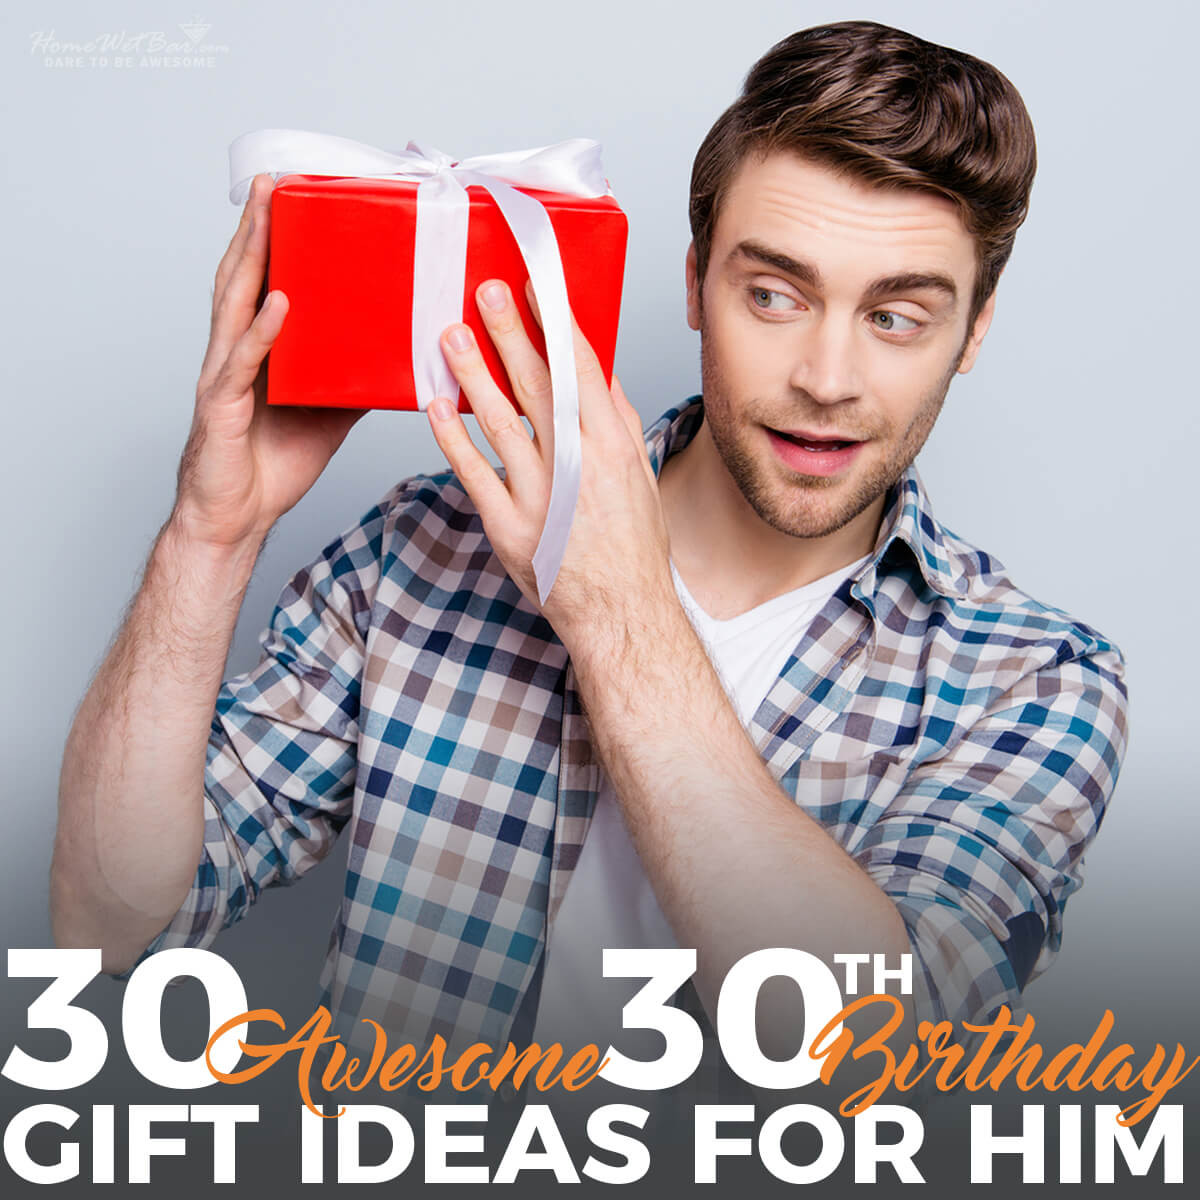 Creative 30Th Birthday Gift Ideas For Him
 30 Awesome 30th Birthday Gift Ideas for Him